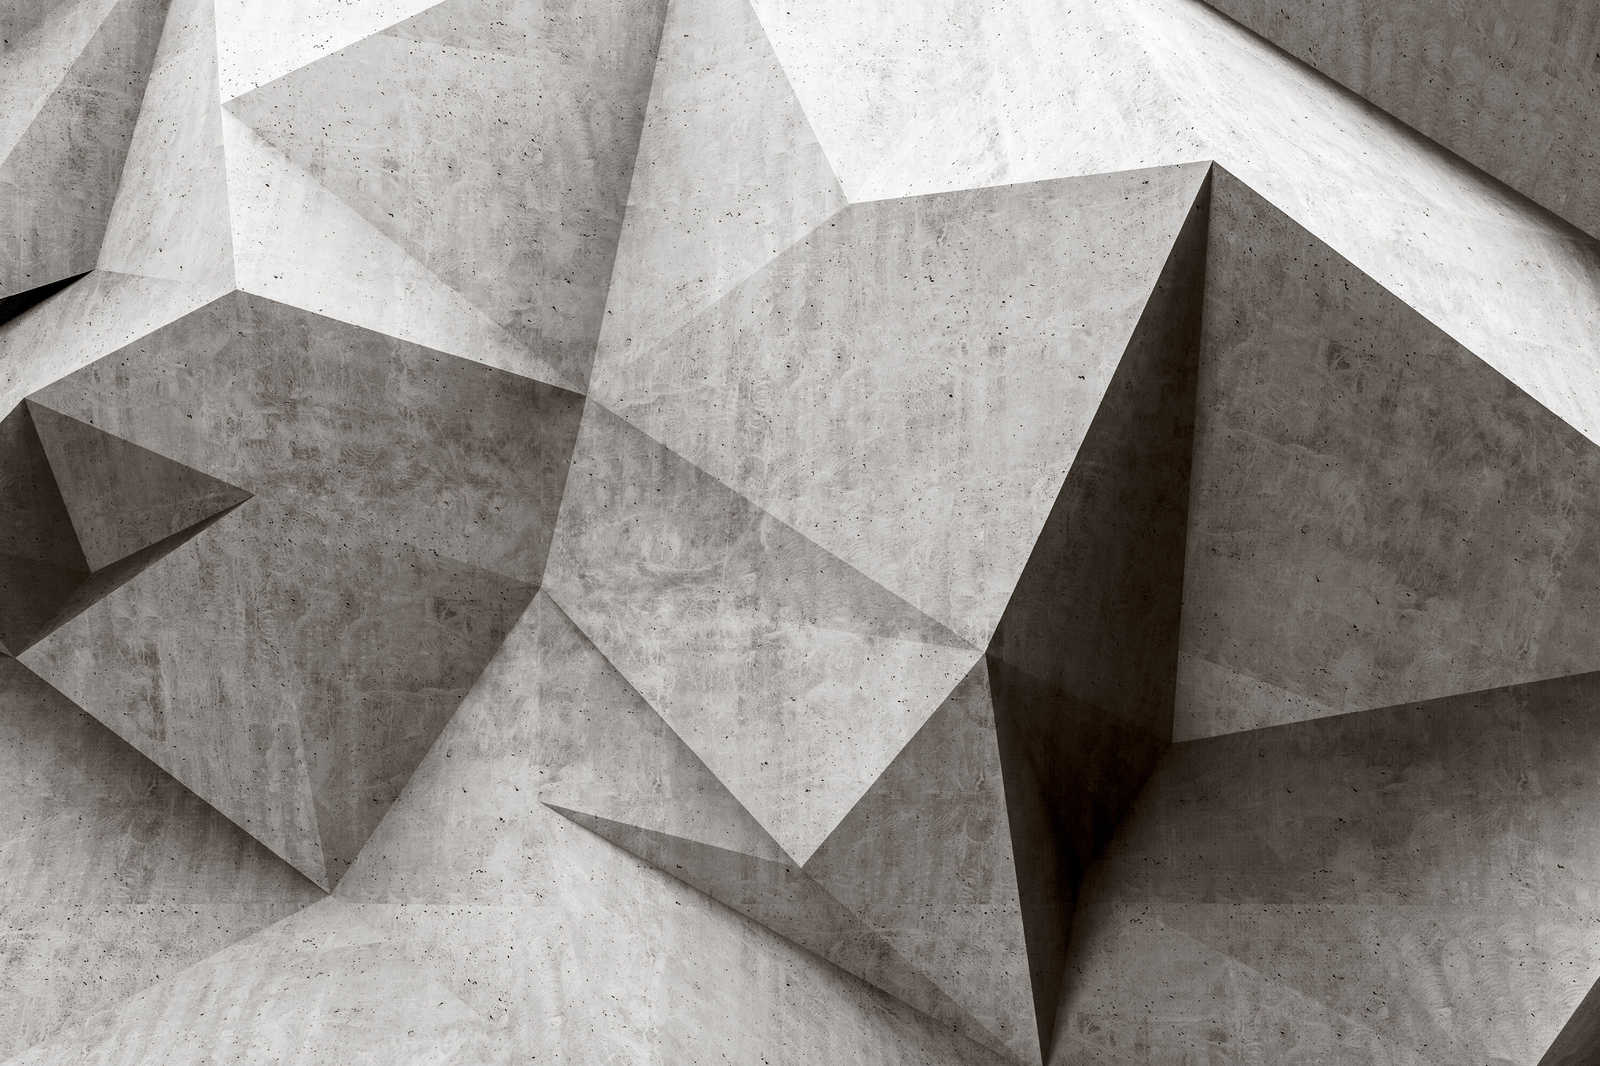             Boulder 1 - Coole 3D Beton-Polygone Leinwandbild – 1,20 m x 0,80 m
        